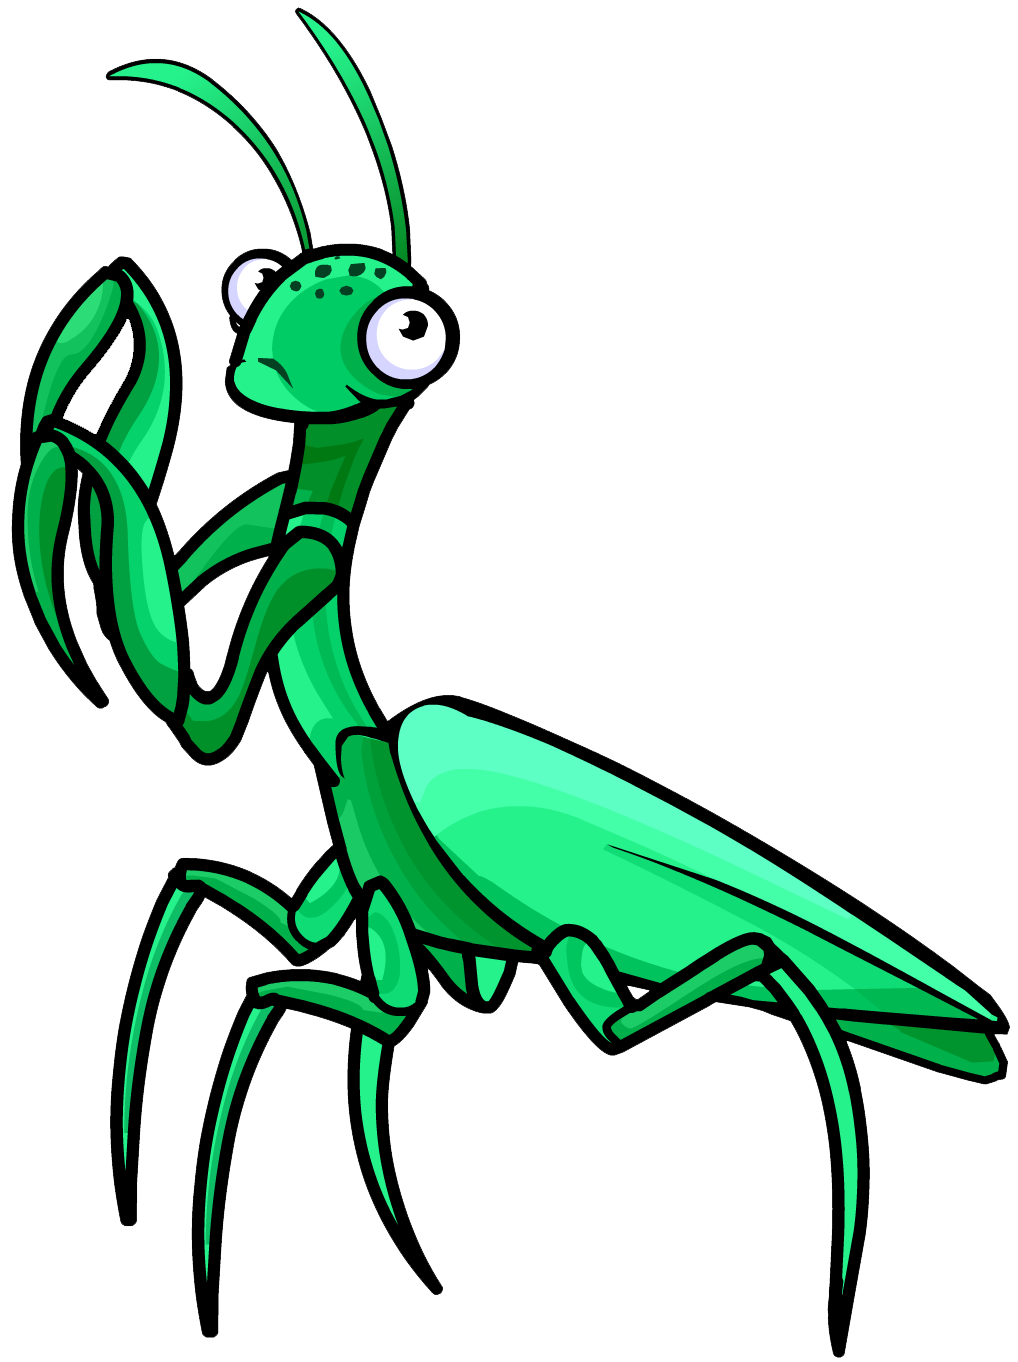 Mantis PNG images Download 